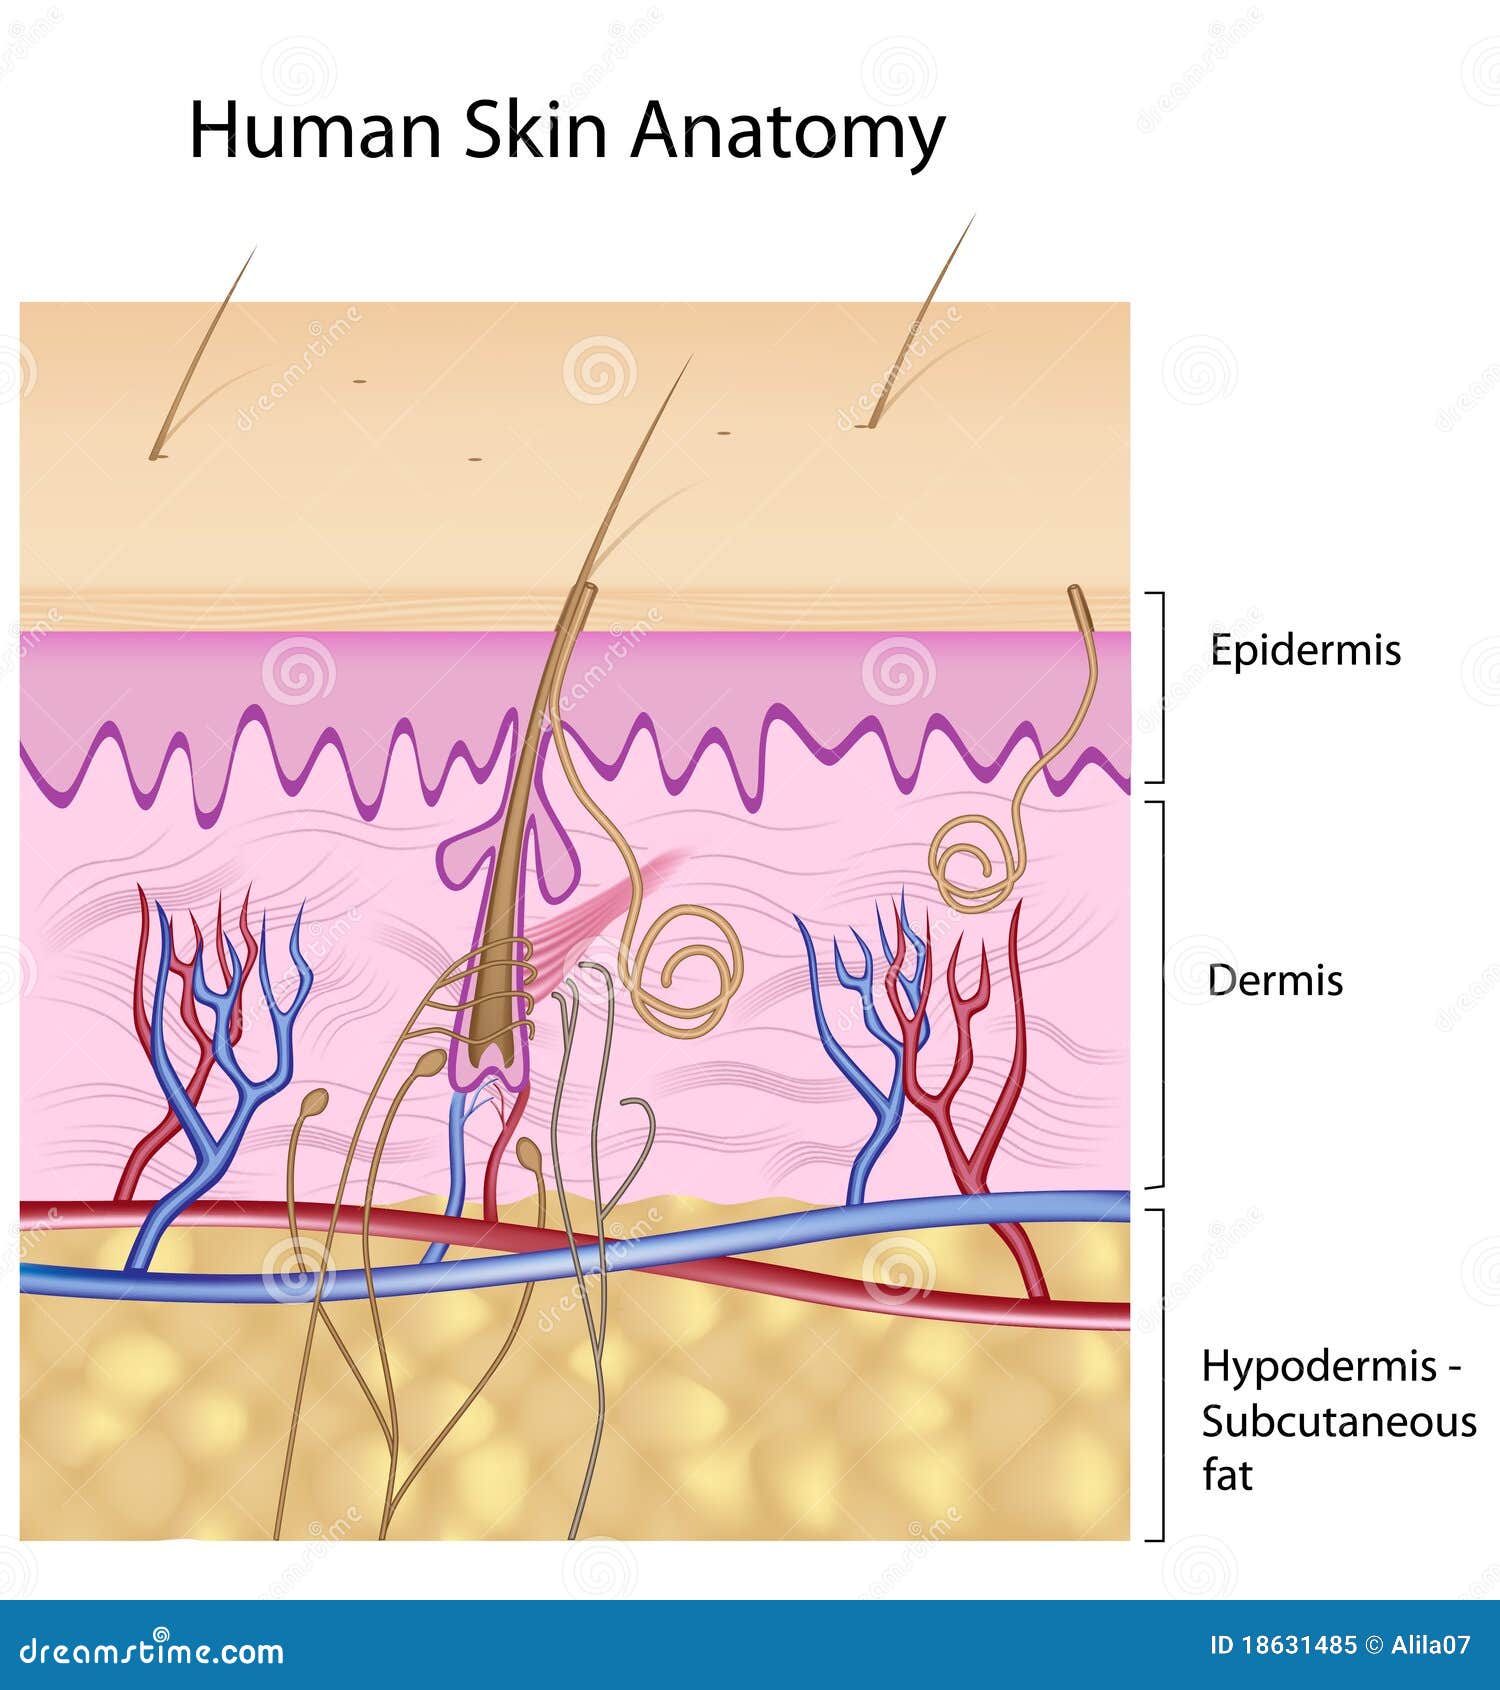 Human Skin Anatomy, Non-labeled Version Stock Vector - Illustration of